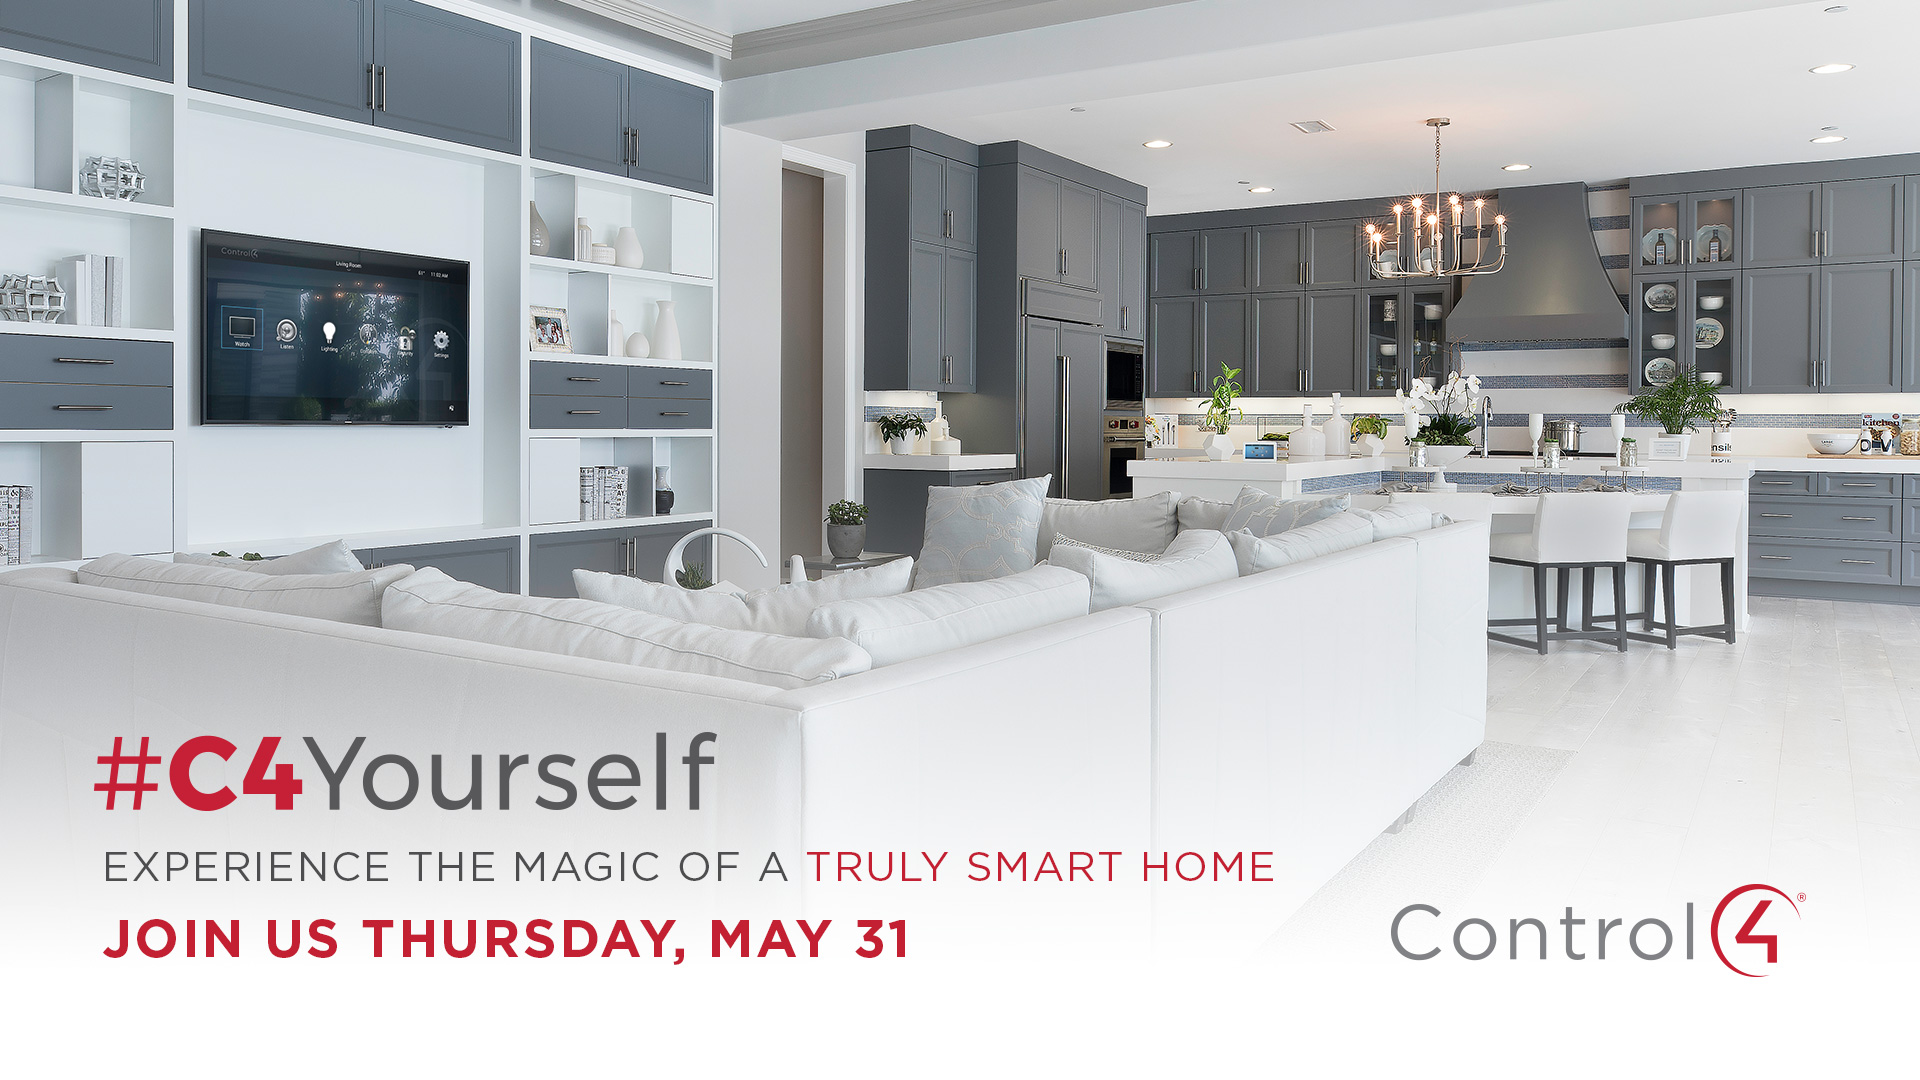 When Choosing A Smart Home, Experience Matters - Smart Home , HD Wallpaper & Backgrounds